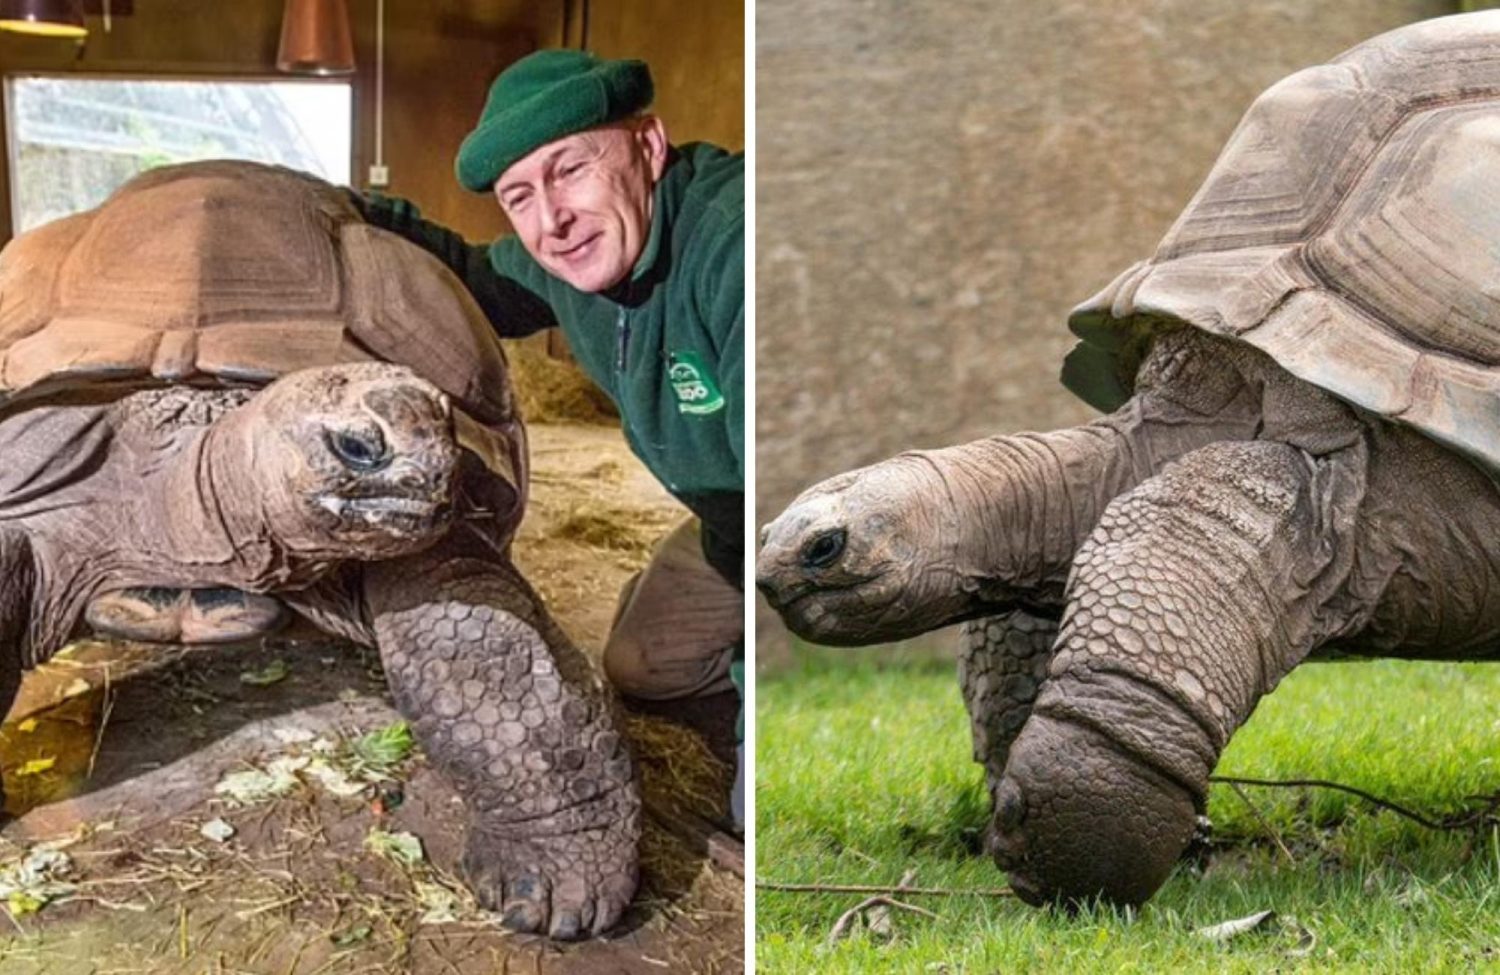 Blackpool Zoo's Giant "much-loved" Tortoise Darwin Dies Aged 105